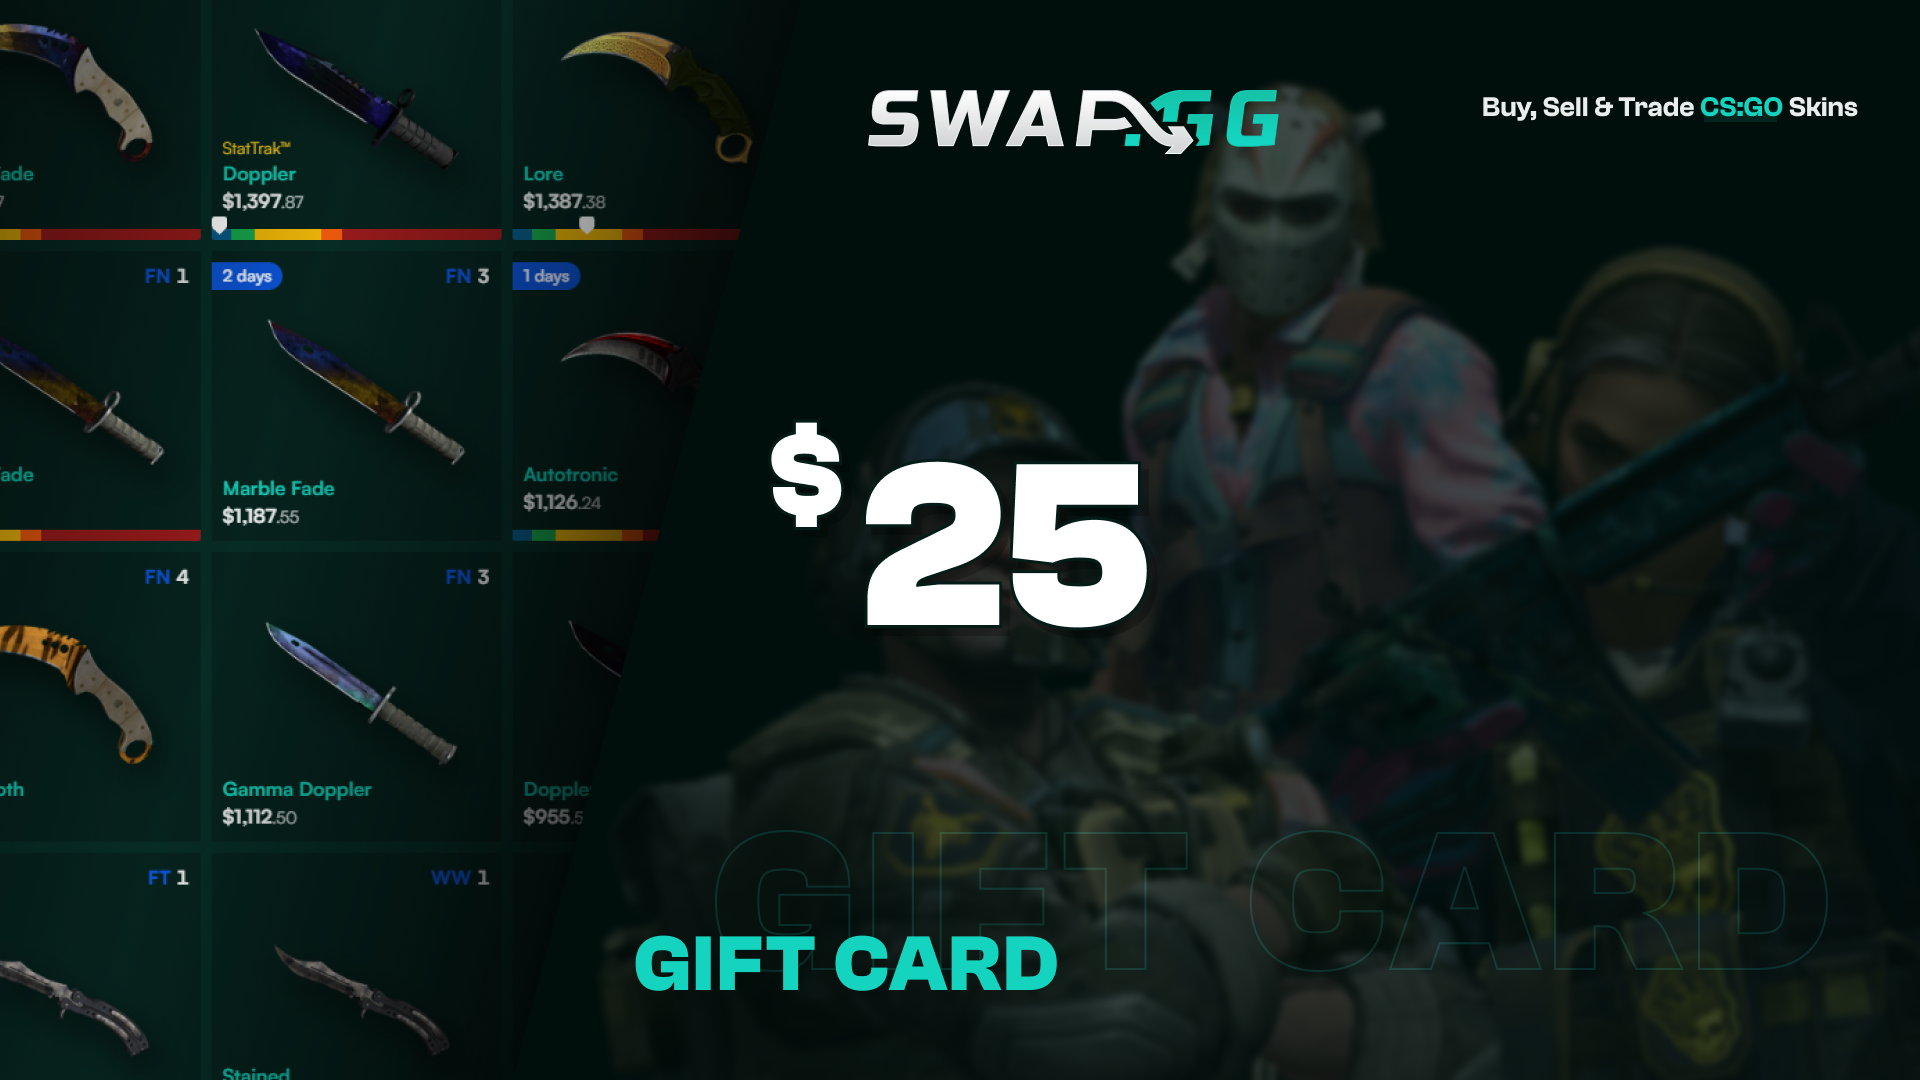 Swap.gg $25 Gift Card